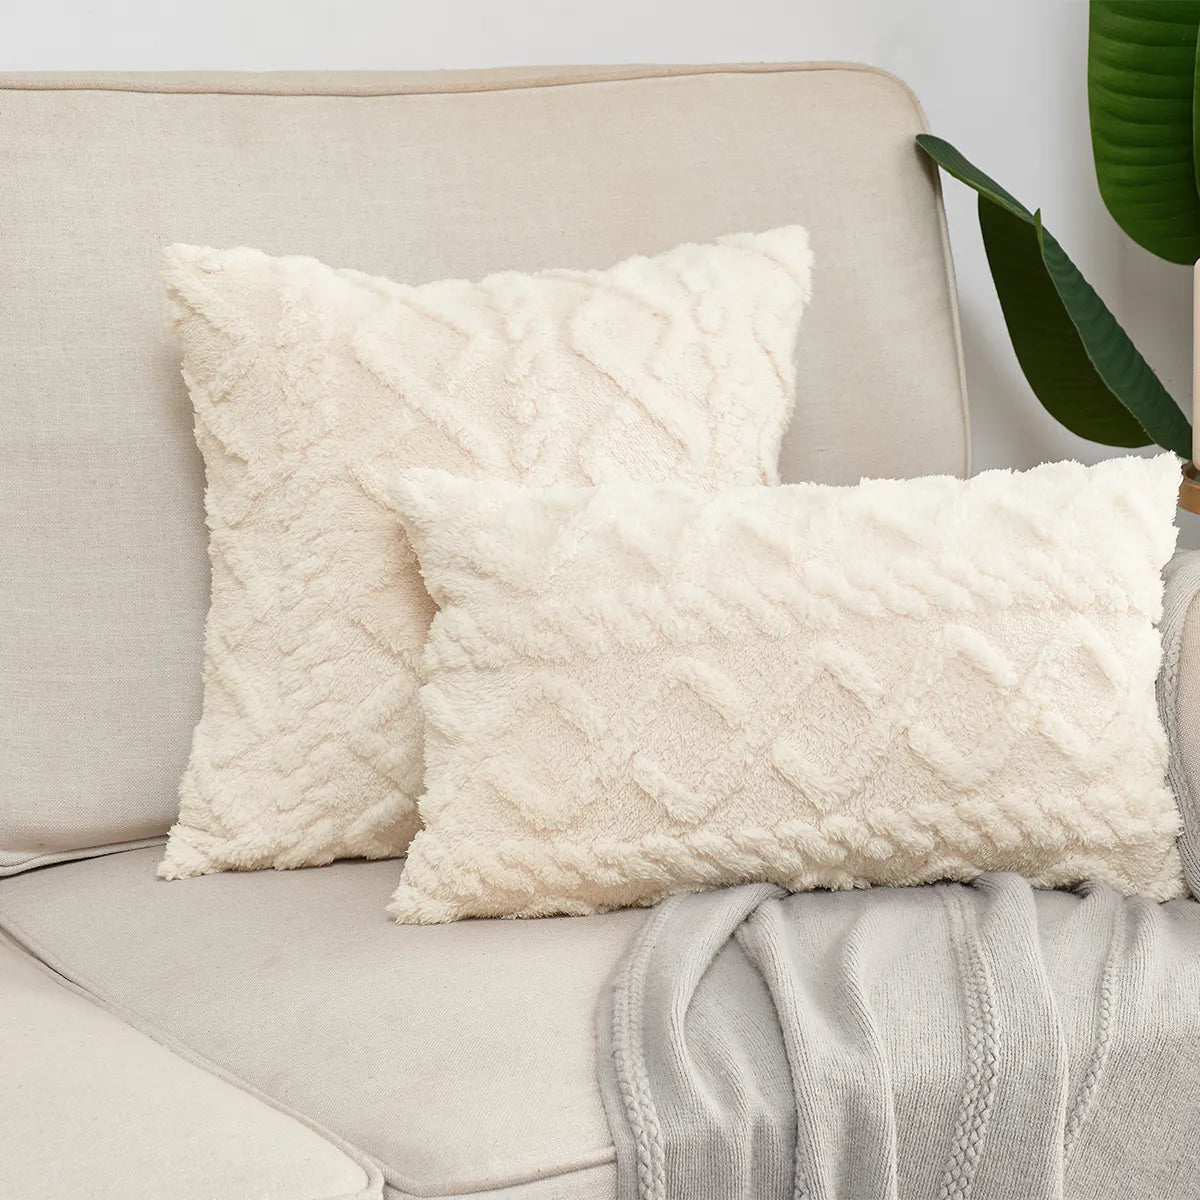 Plush Fabric Decorative cushion covers